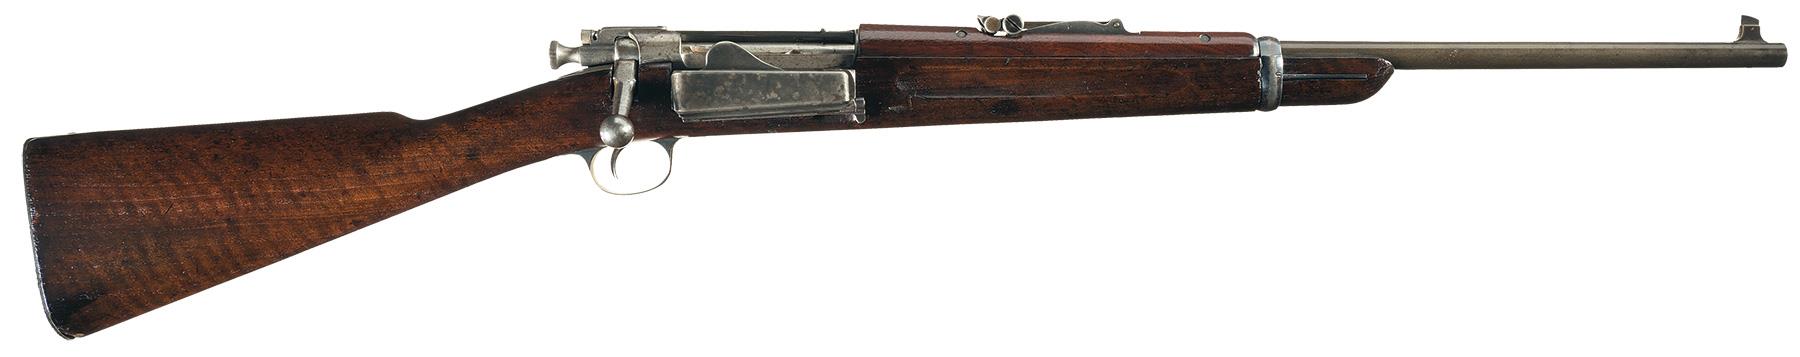 us springfield 1898 carbine